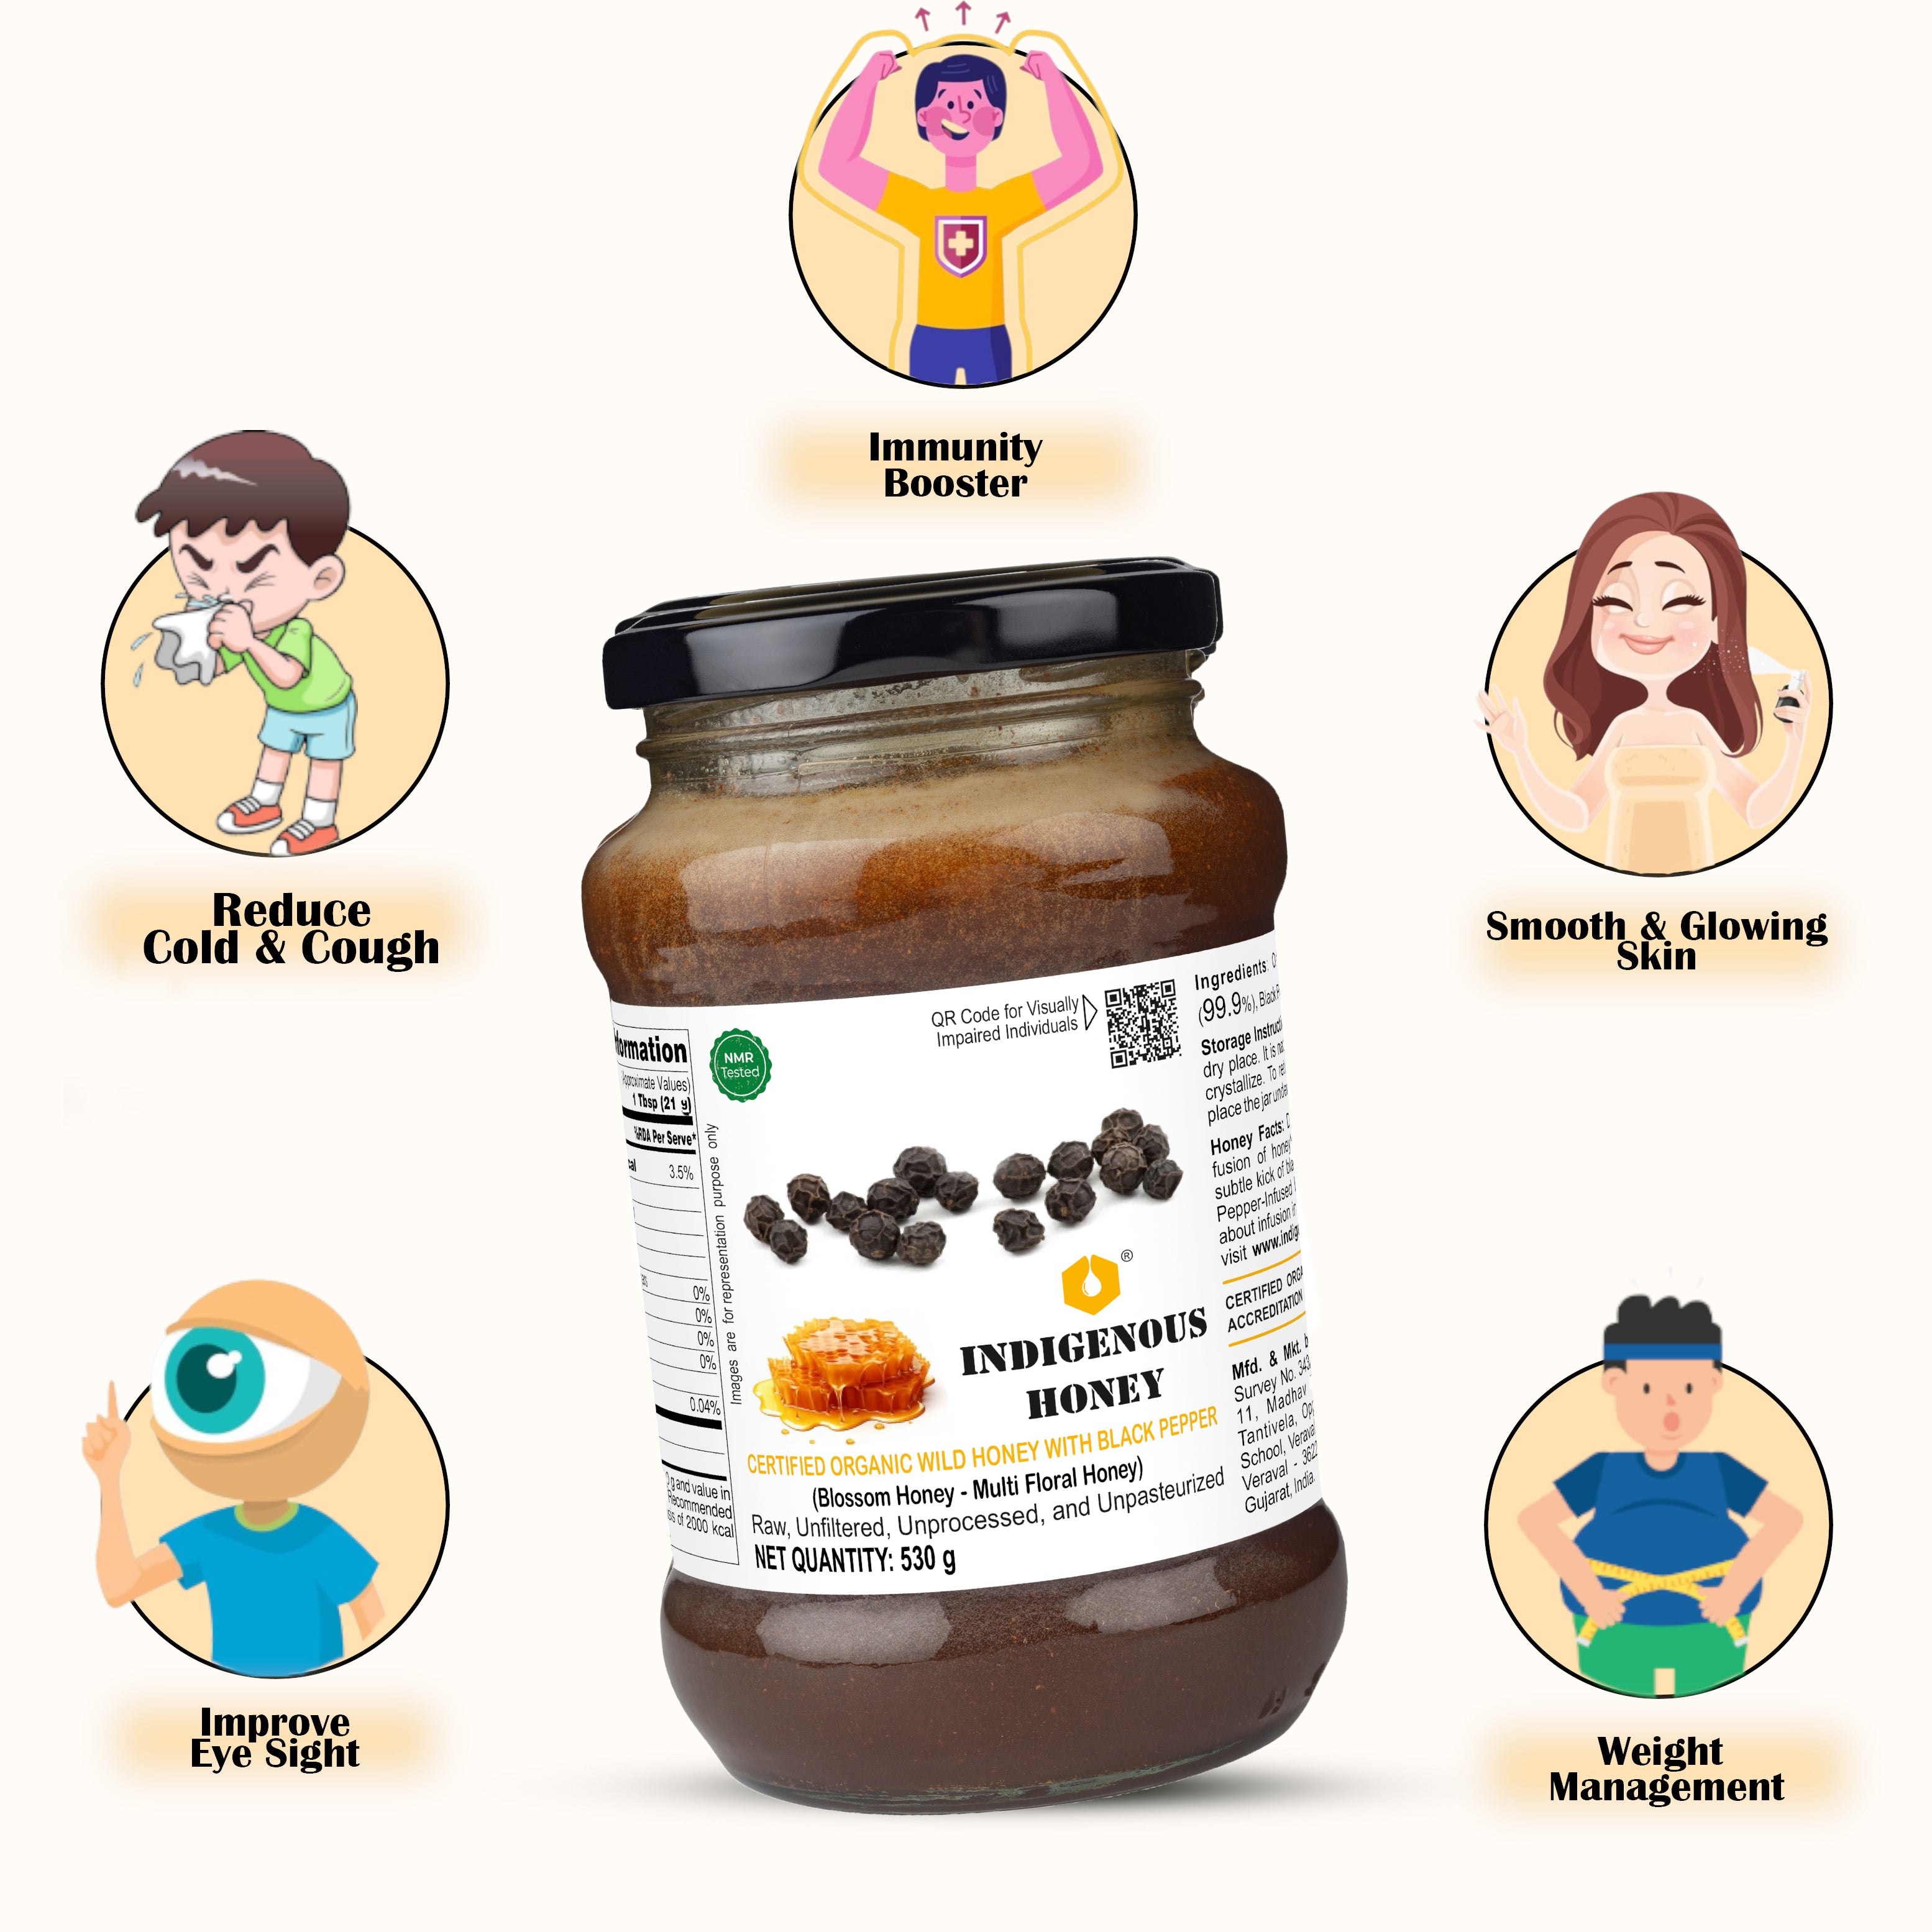 Indigenous Honey Spiced Immnunity Black Pepper